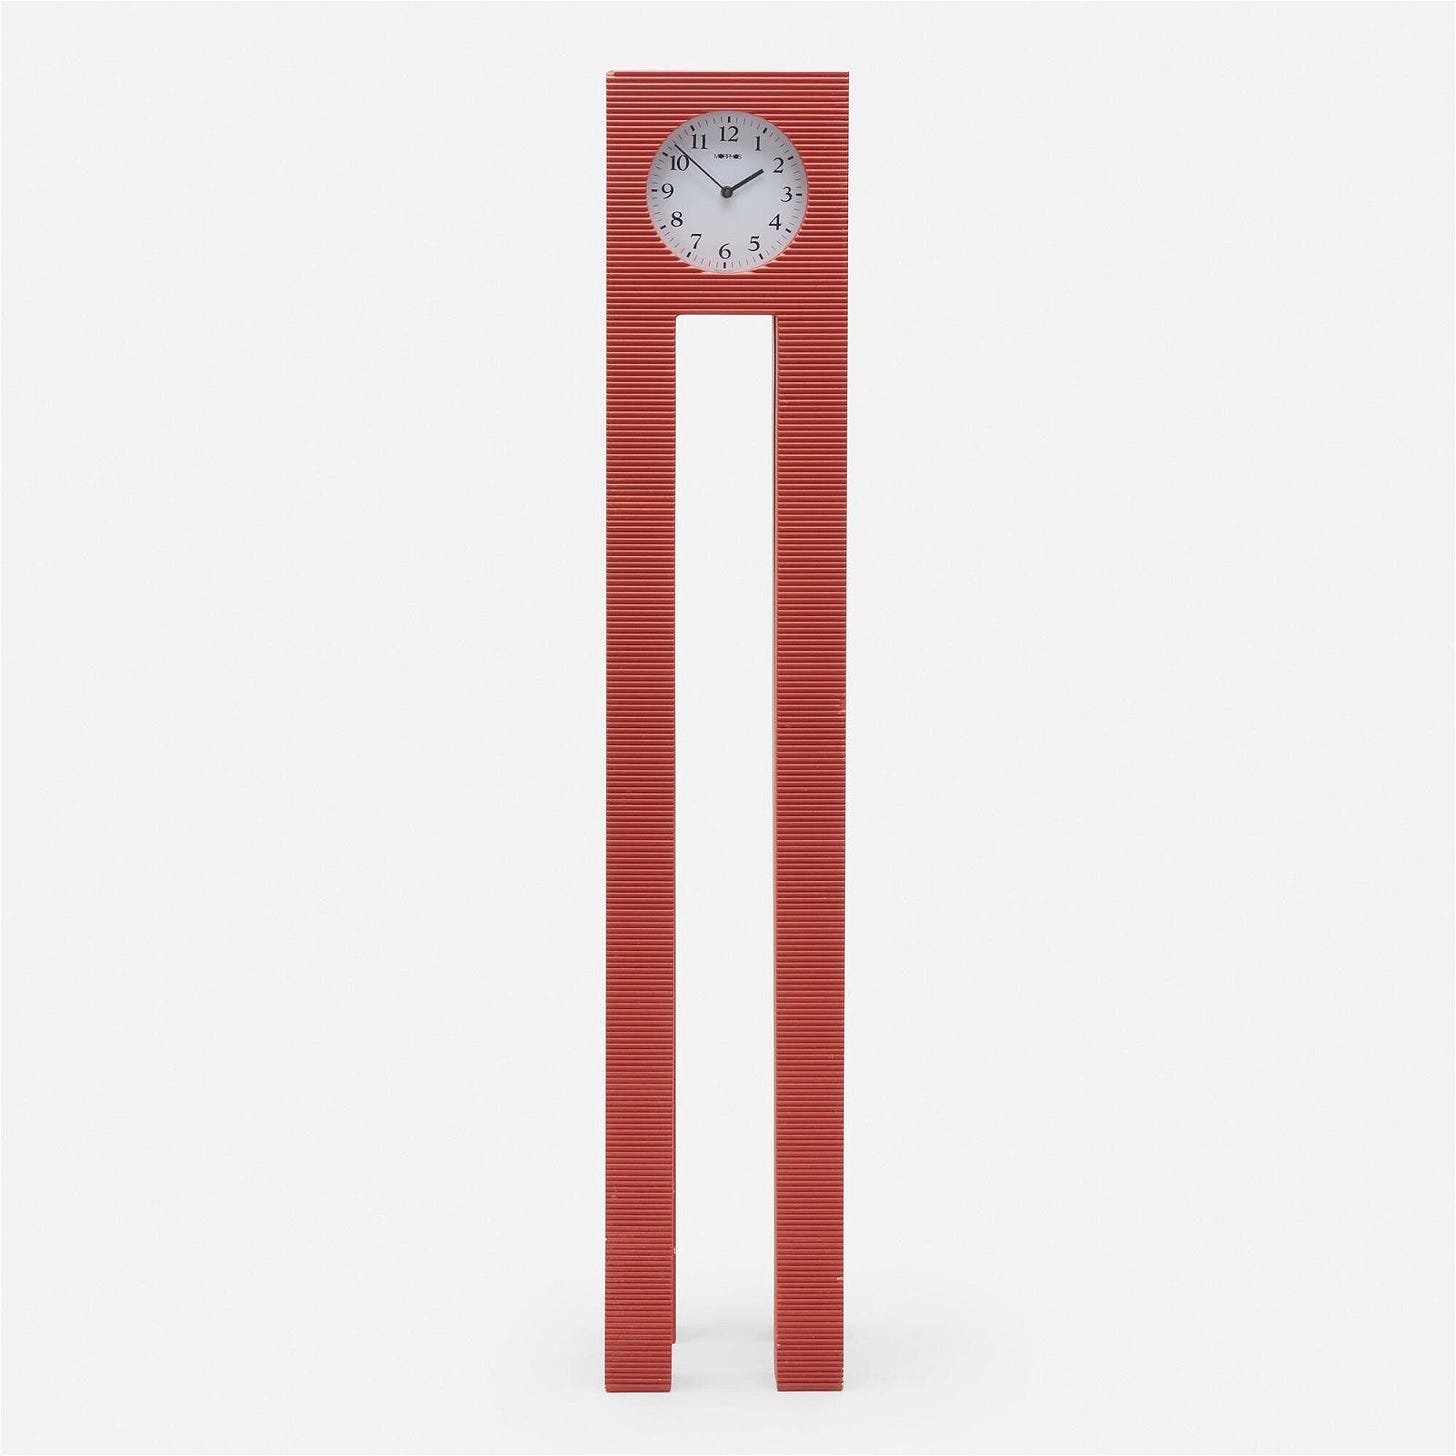 Shigeru Uchida, Dear Morris clock